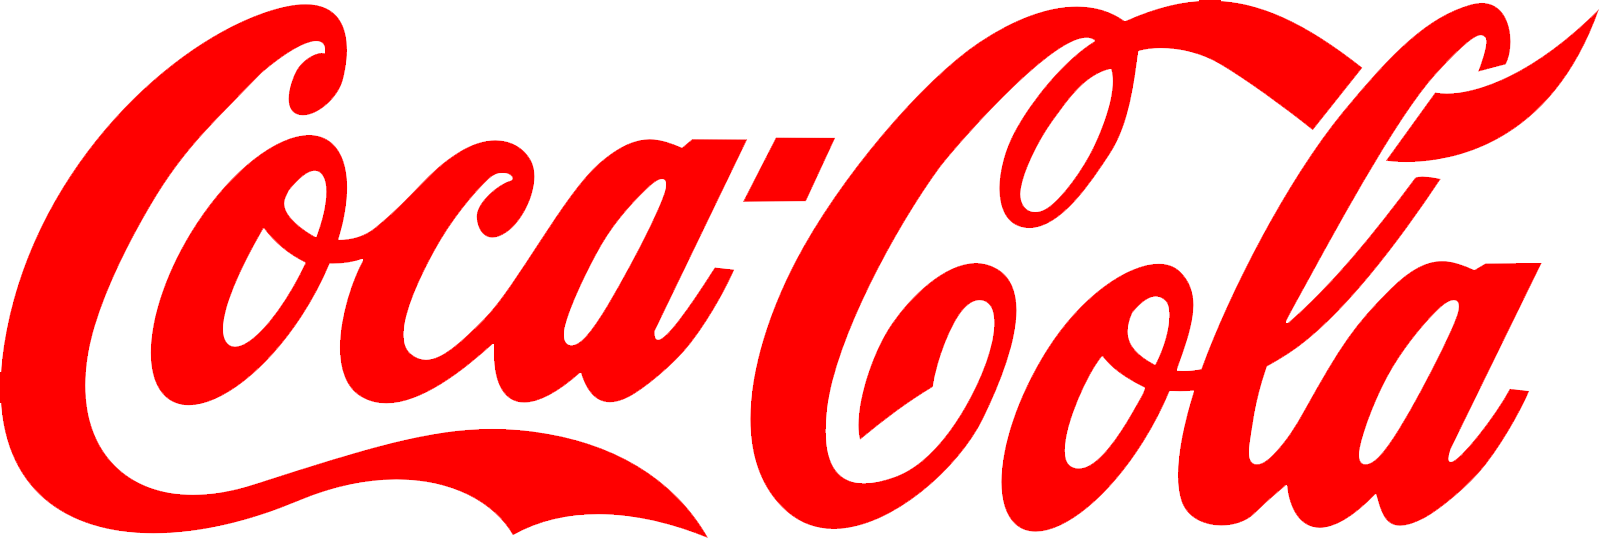 coca-cola recylcing tour